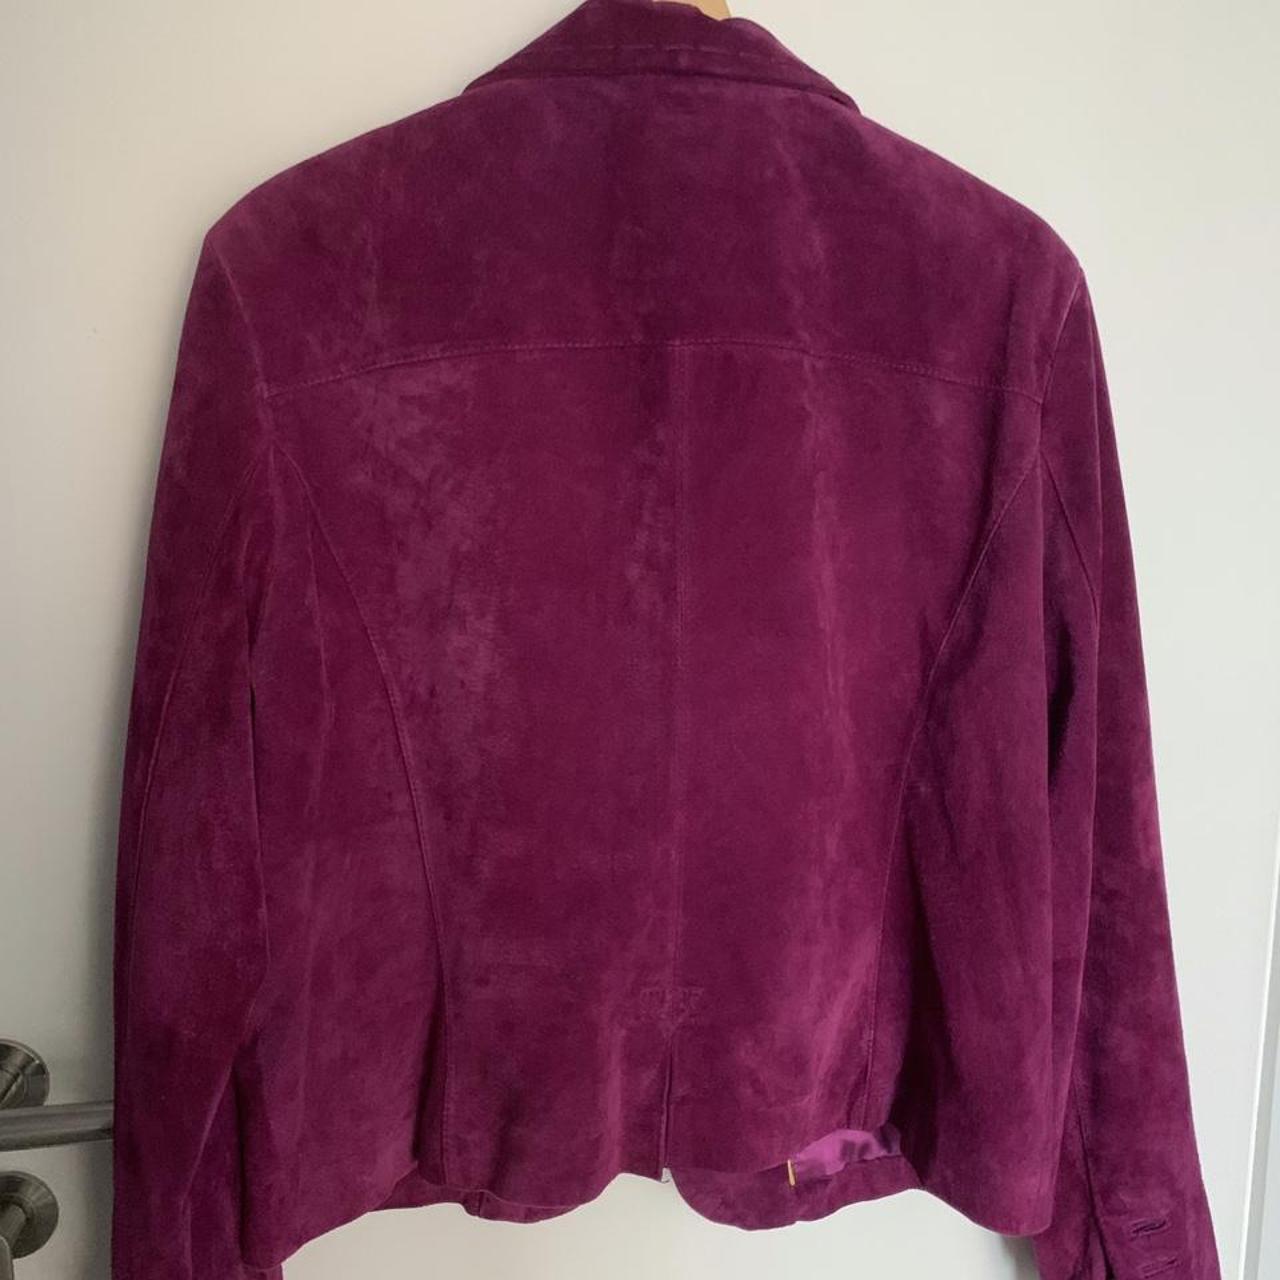 Vintage Biba purple suede blazer jacket. Size M -... - Depop